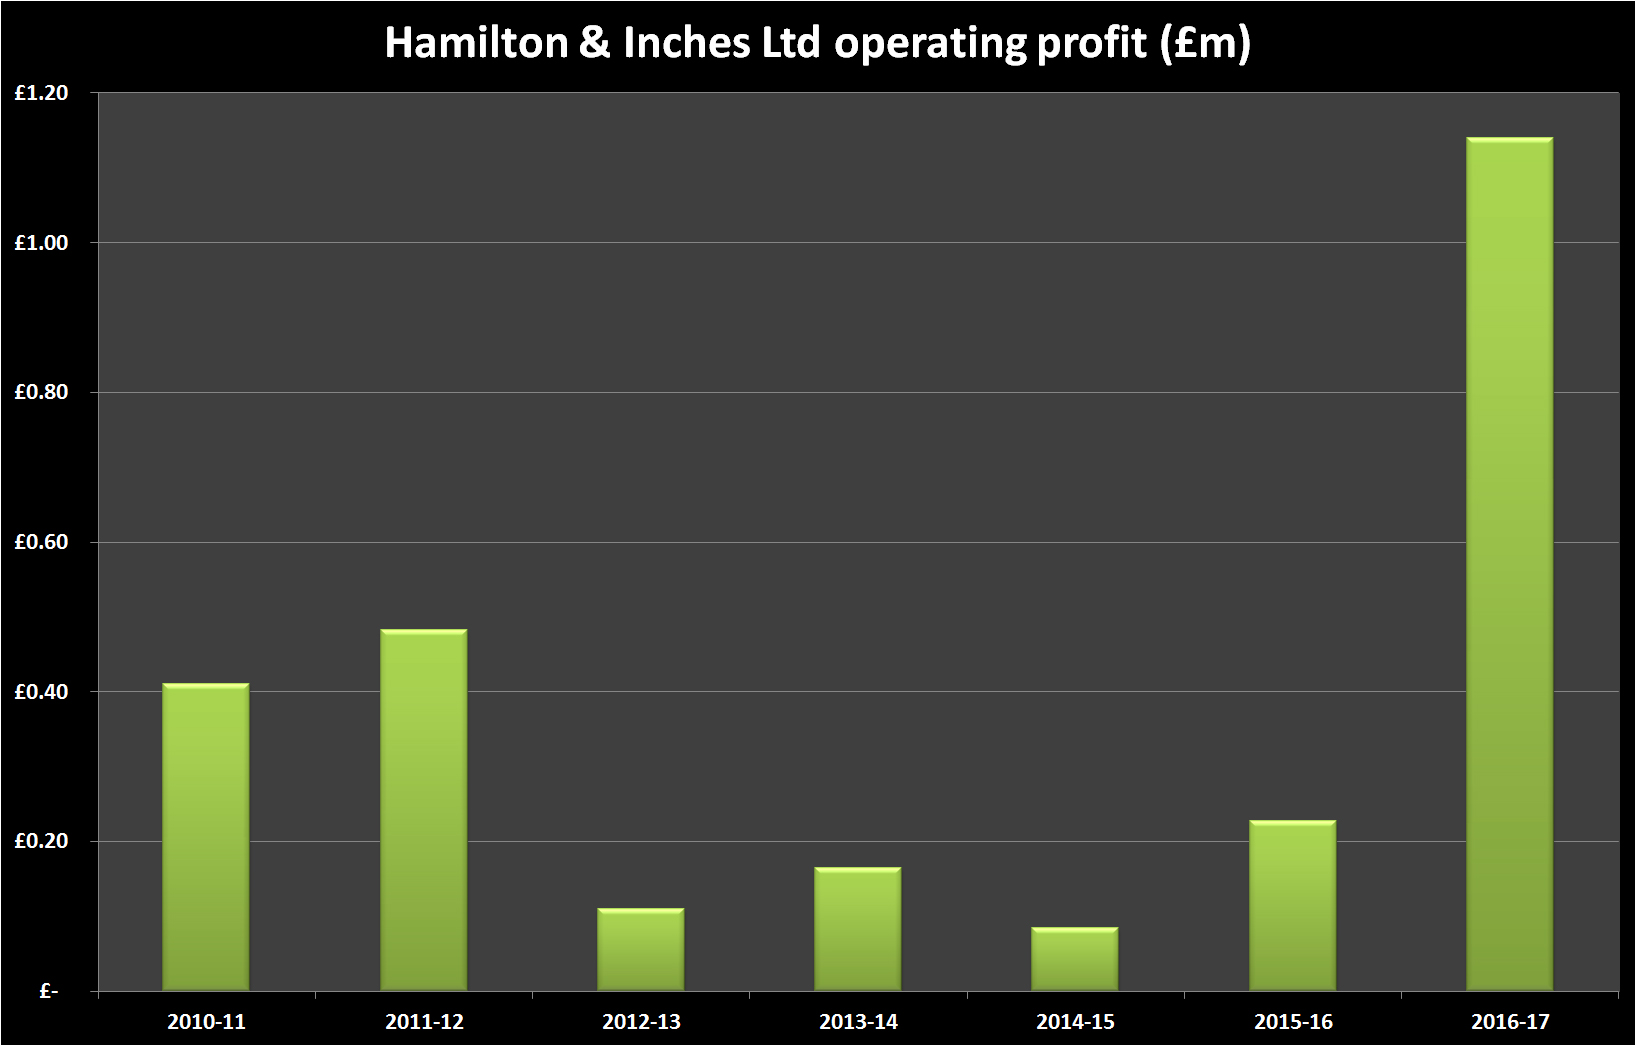 Hamilton & inches financial history - operating profit